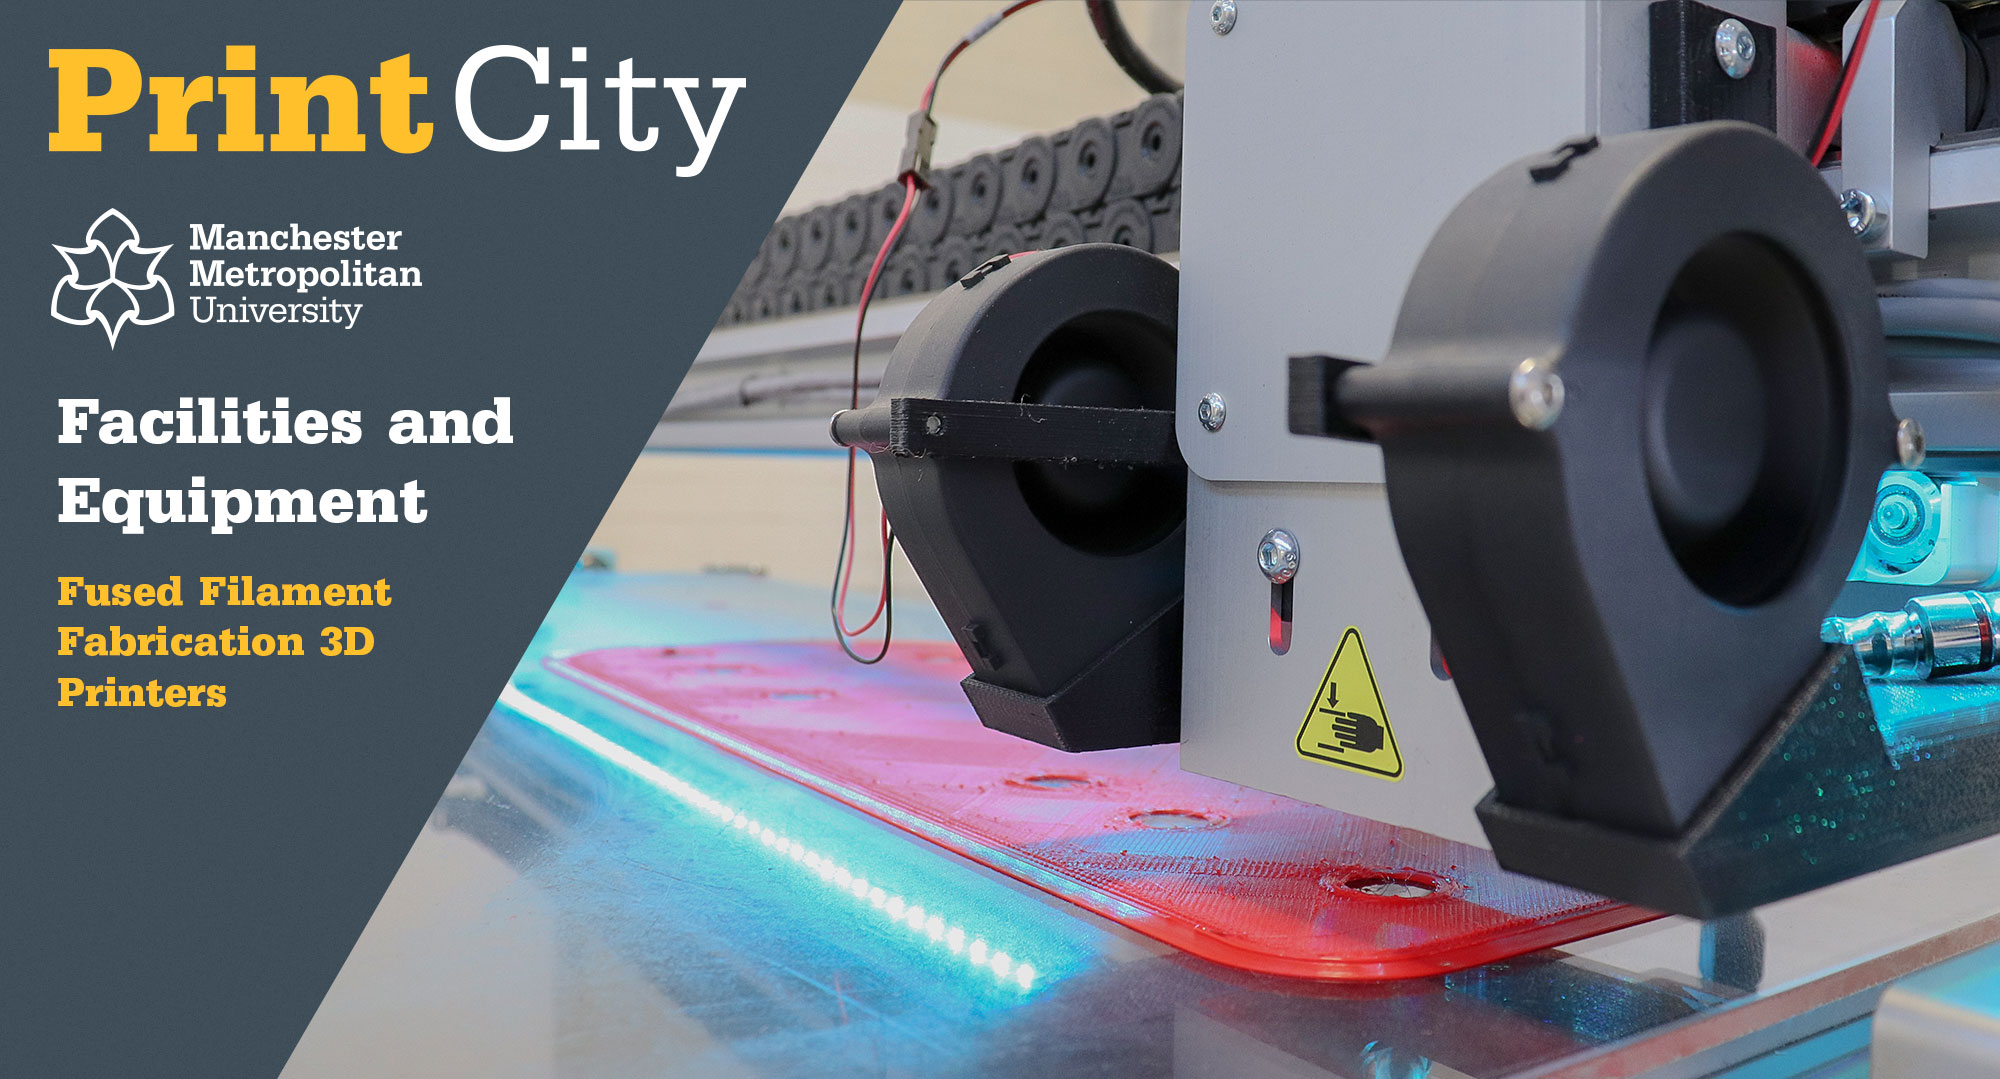 Fused Filament Fabrication 3D Printers - PrintCity - Manchester Metropolitan University - Facilities and Equipment